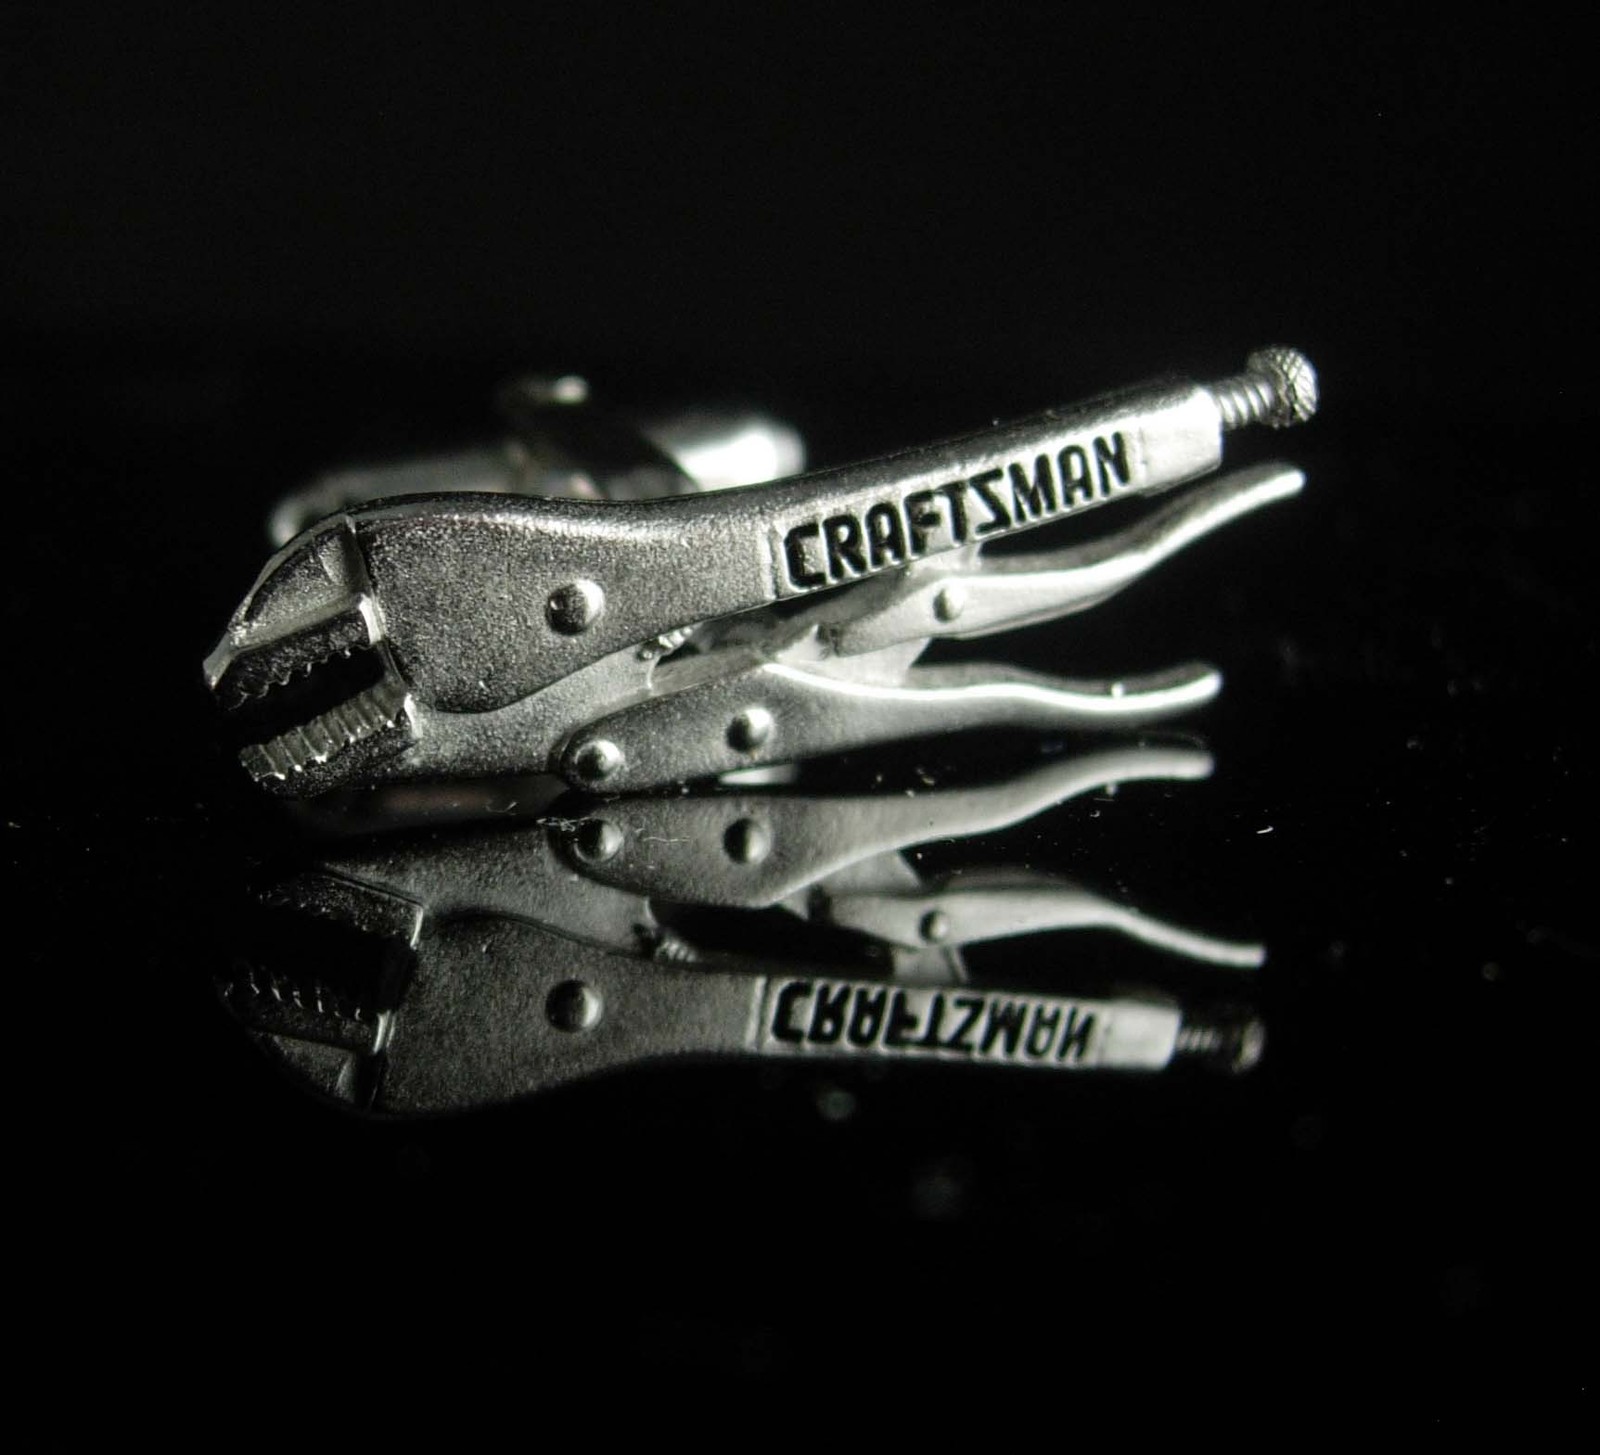 Primary image for Vise Grip cufflinks Tie clip Vintage Craftsman tool cufflinks mechanic plumber g